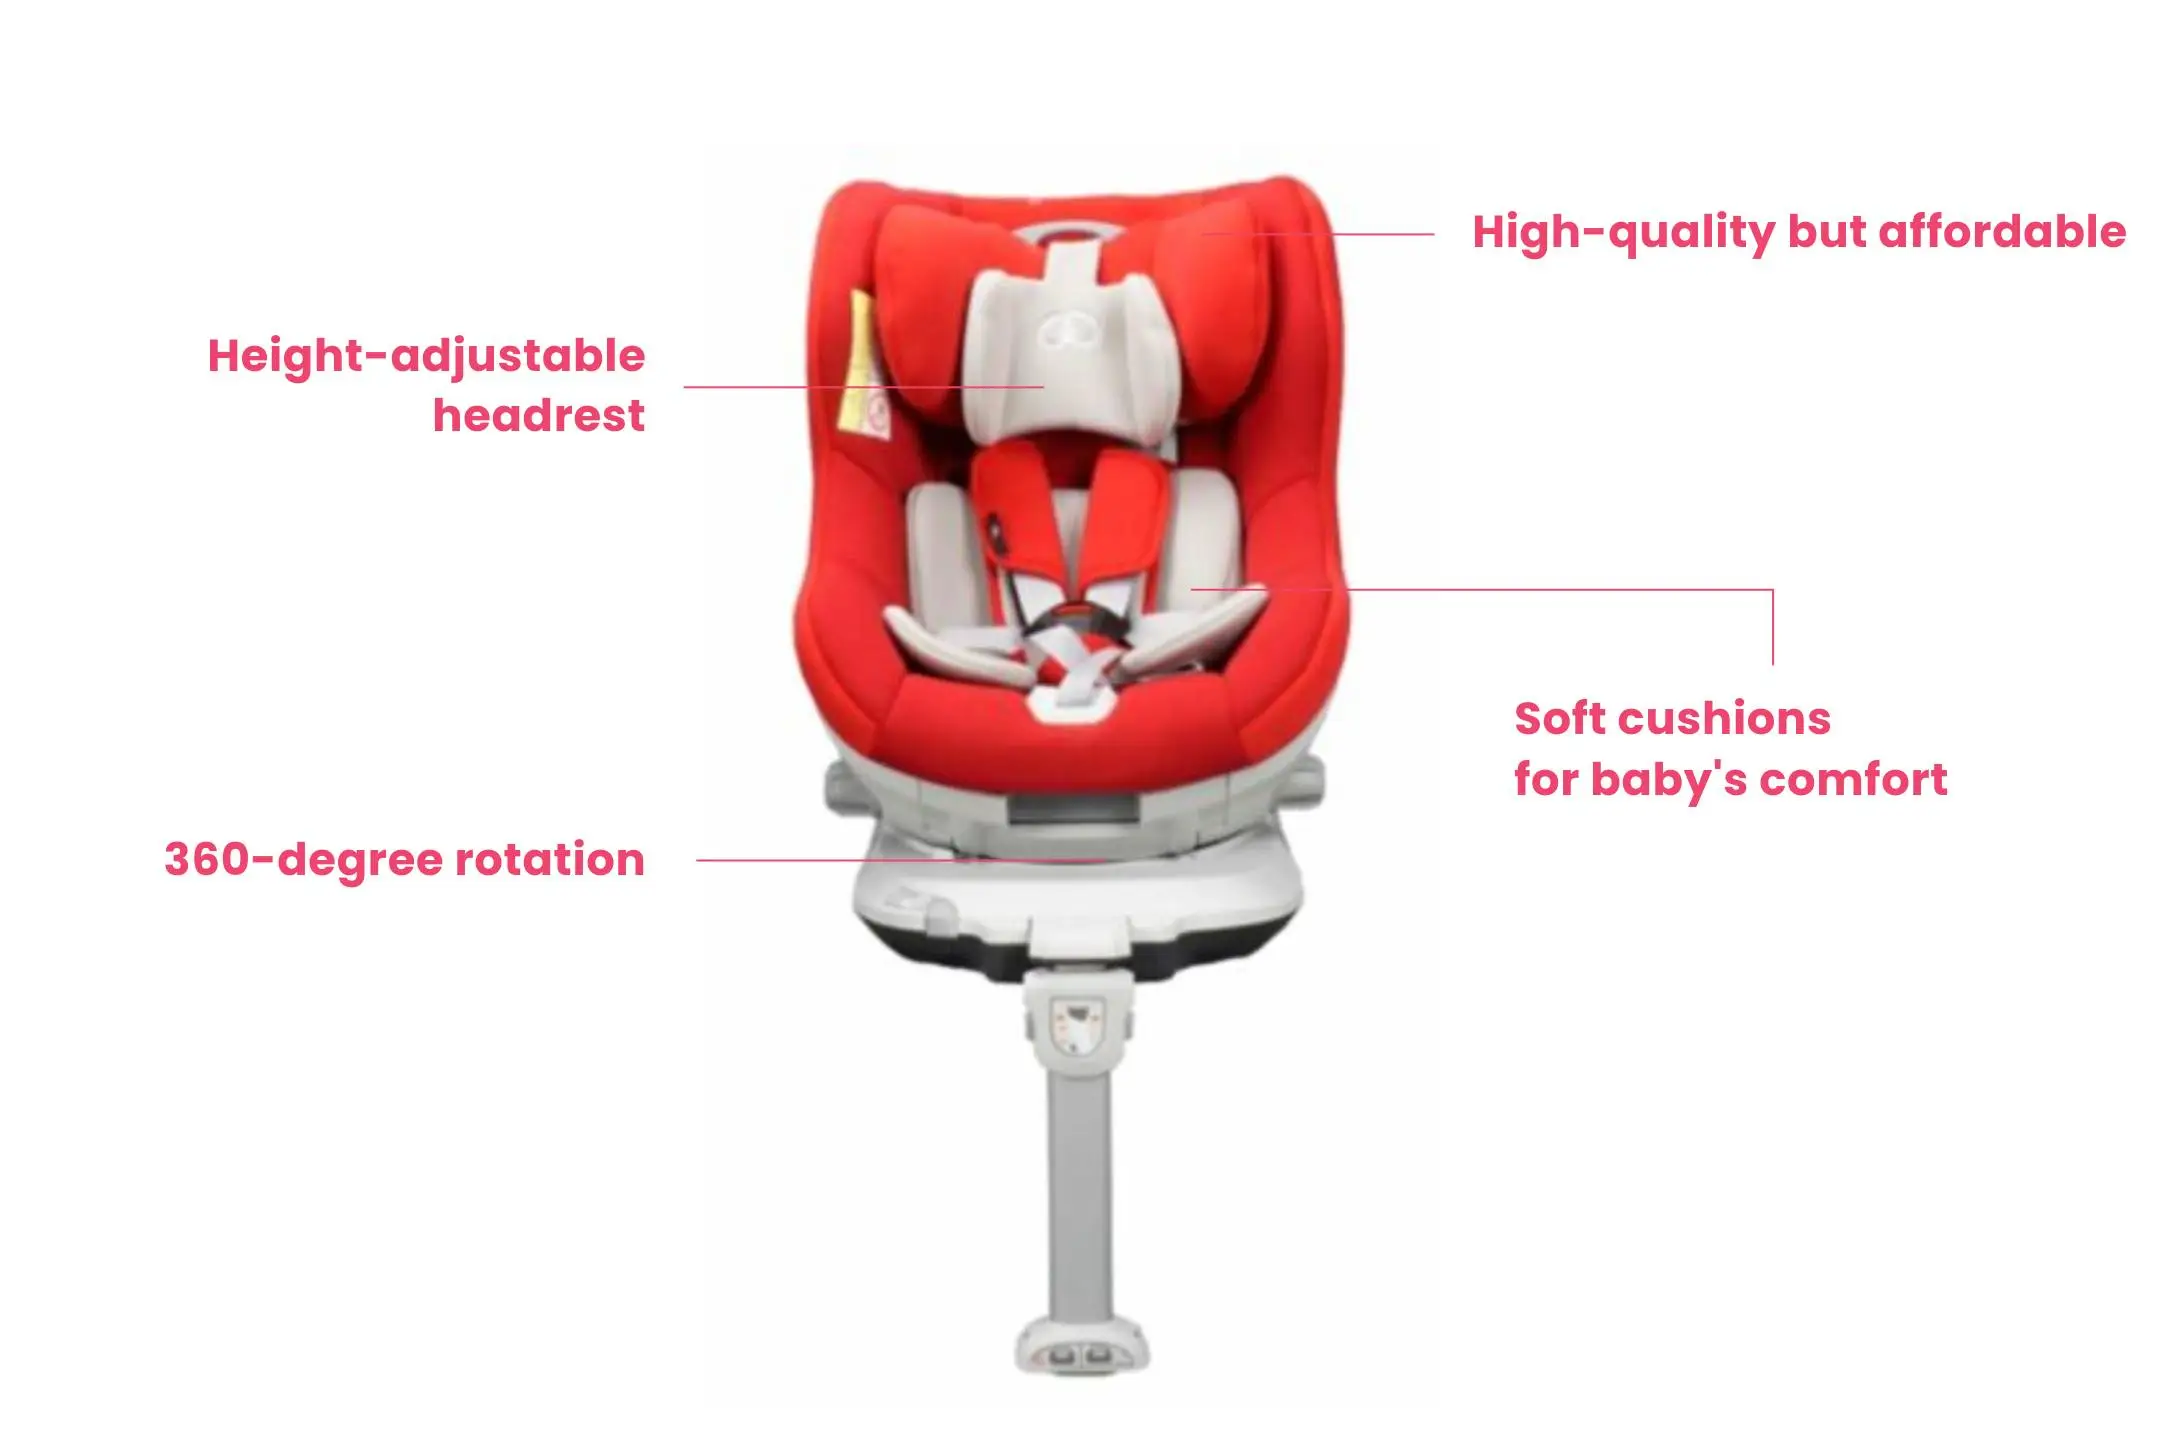 Koopers Bolero Car Seat features